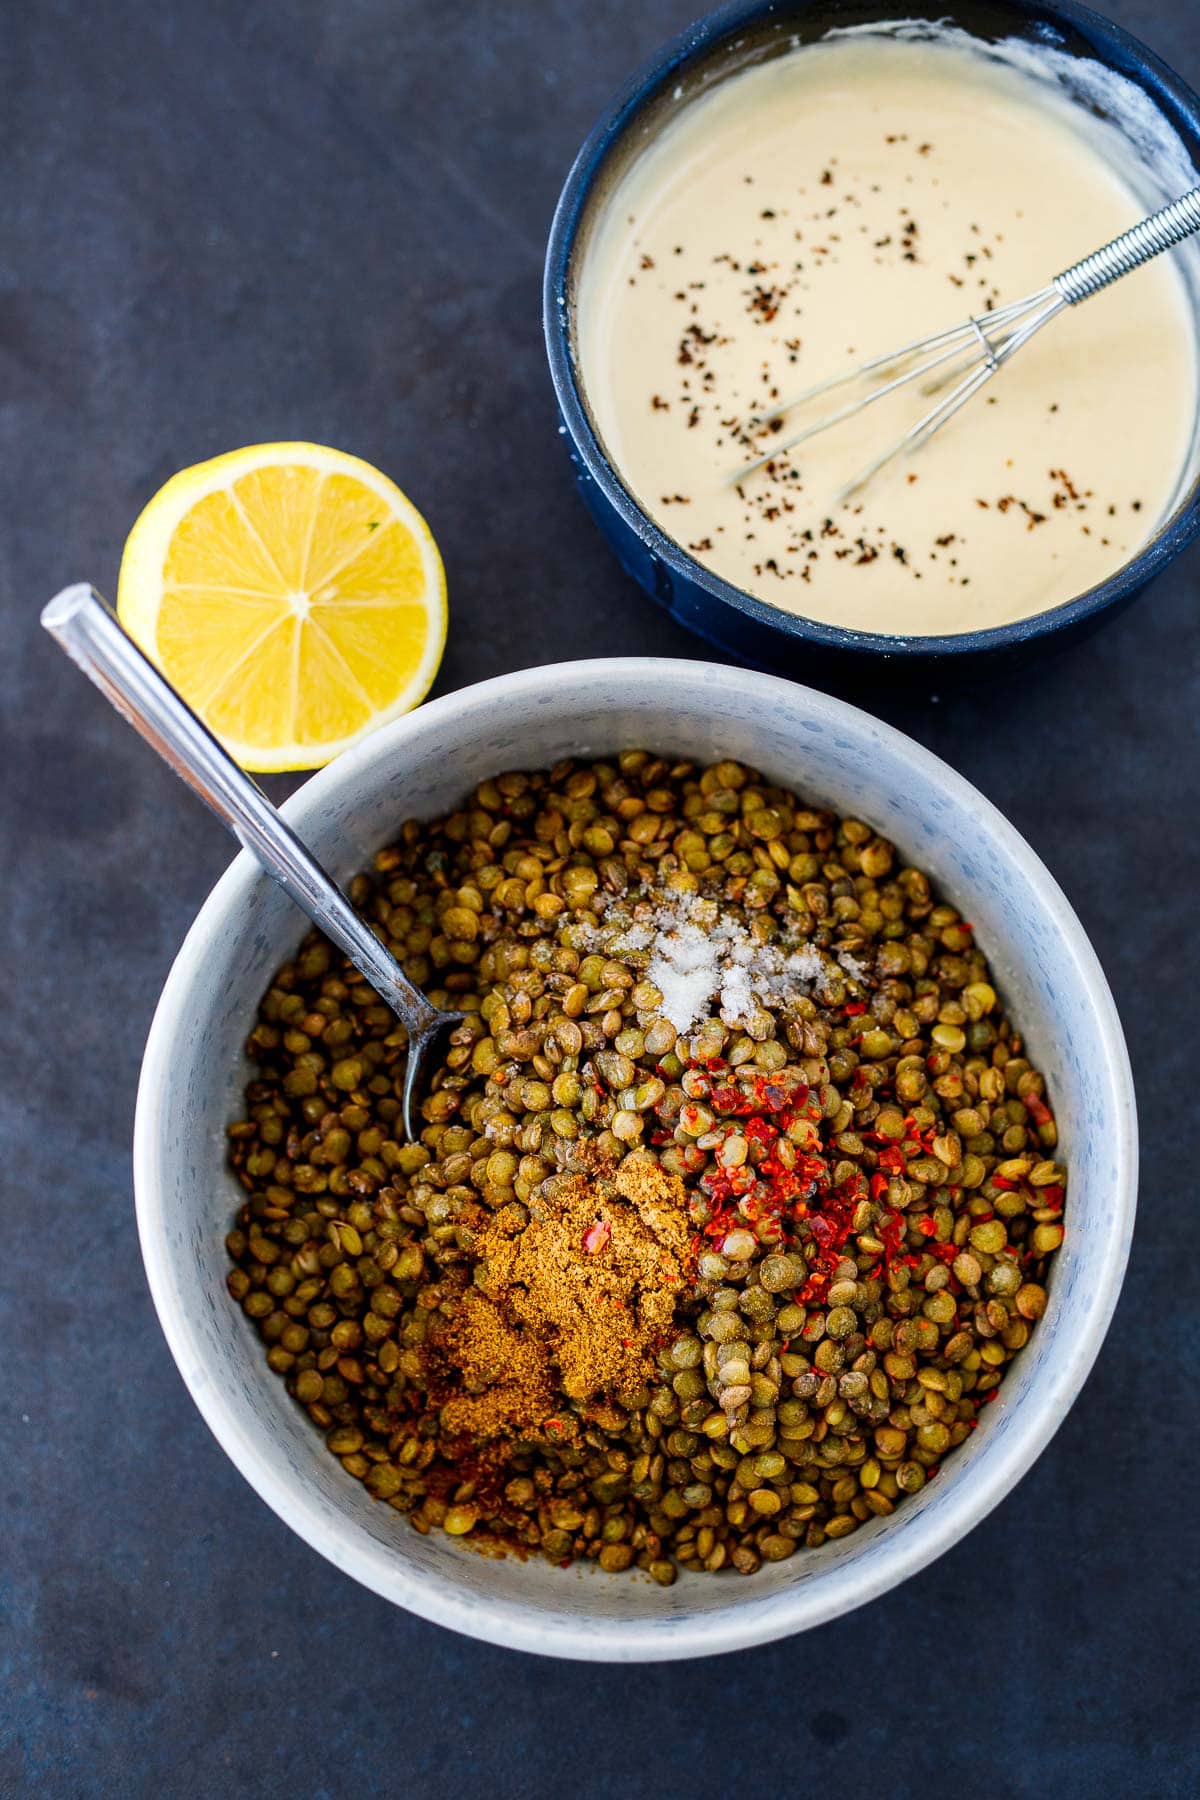 seasoning the lentils and a bowl of tahini sauce. 